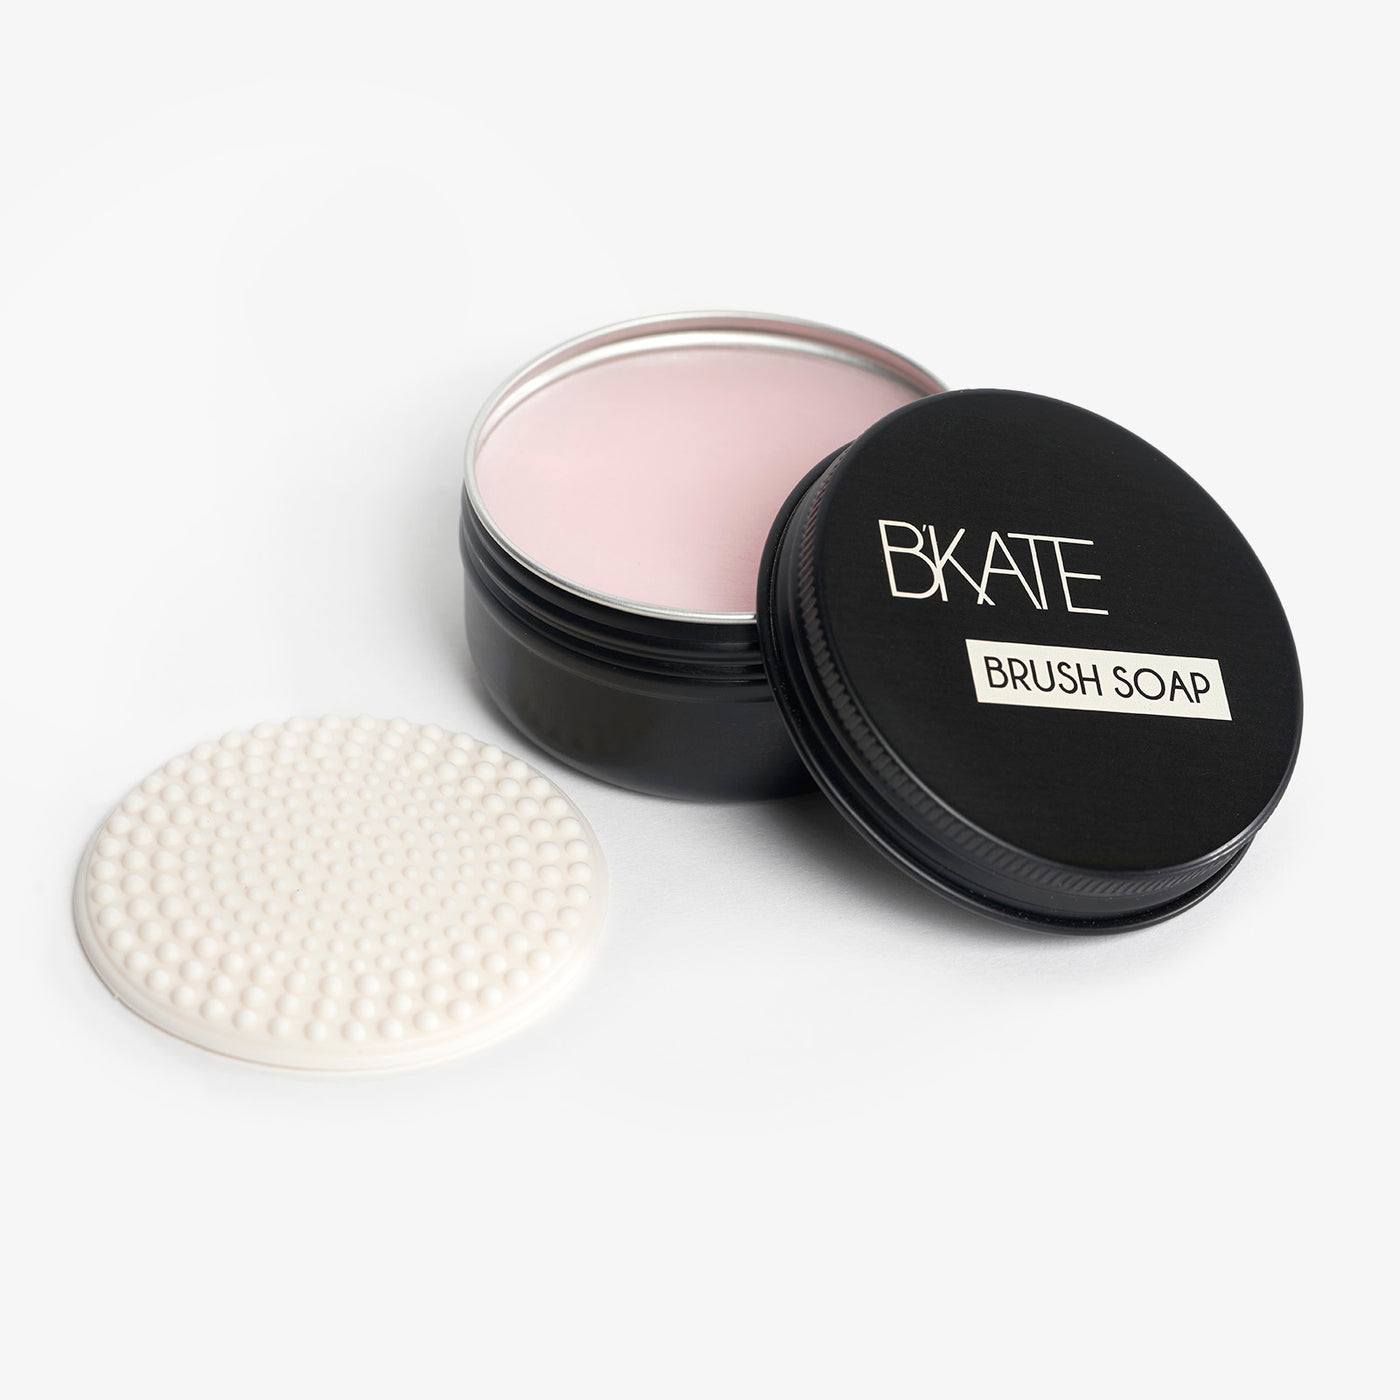 bkate brush soap makeup brush cleaner